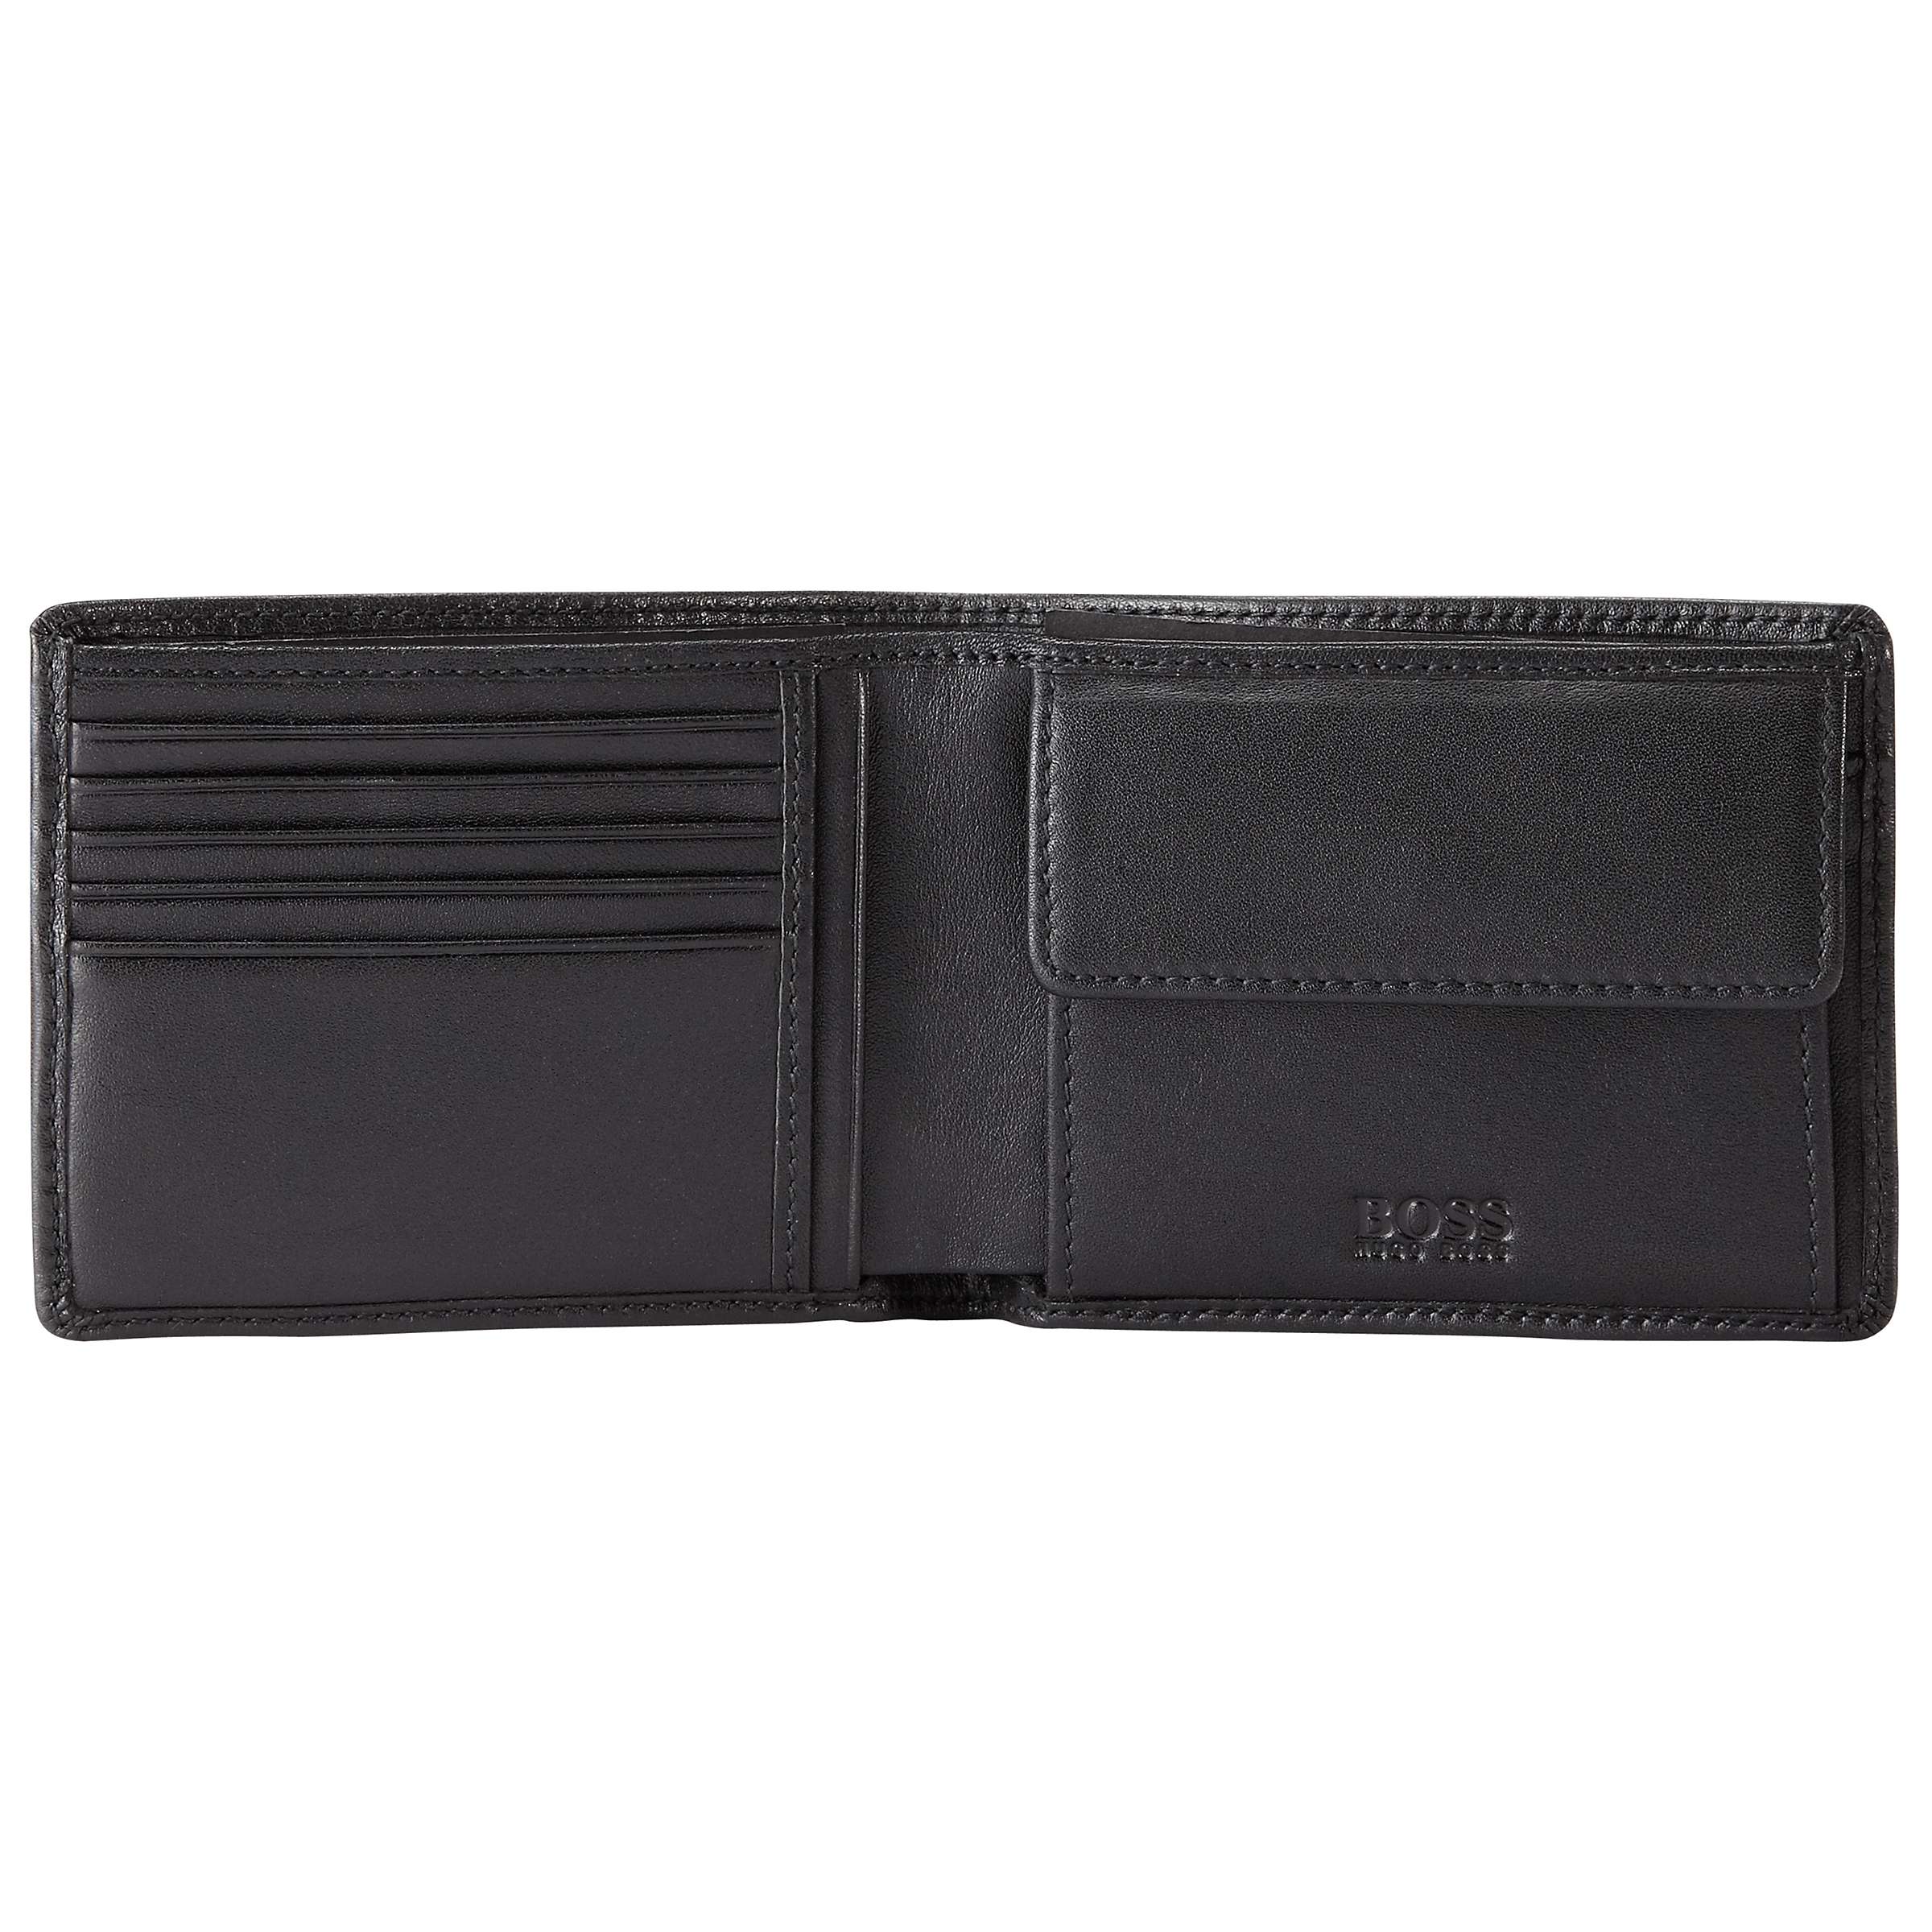 Buy BOSS Asolo Bi-fold Leather Wallet, Black Online at johnlewis.com